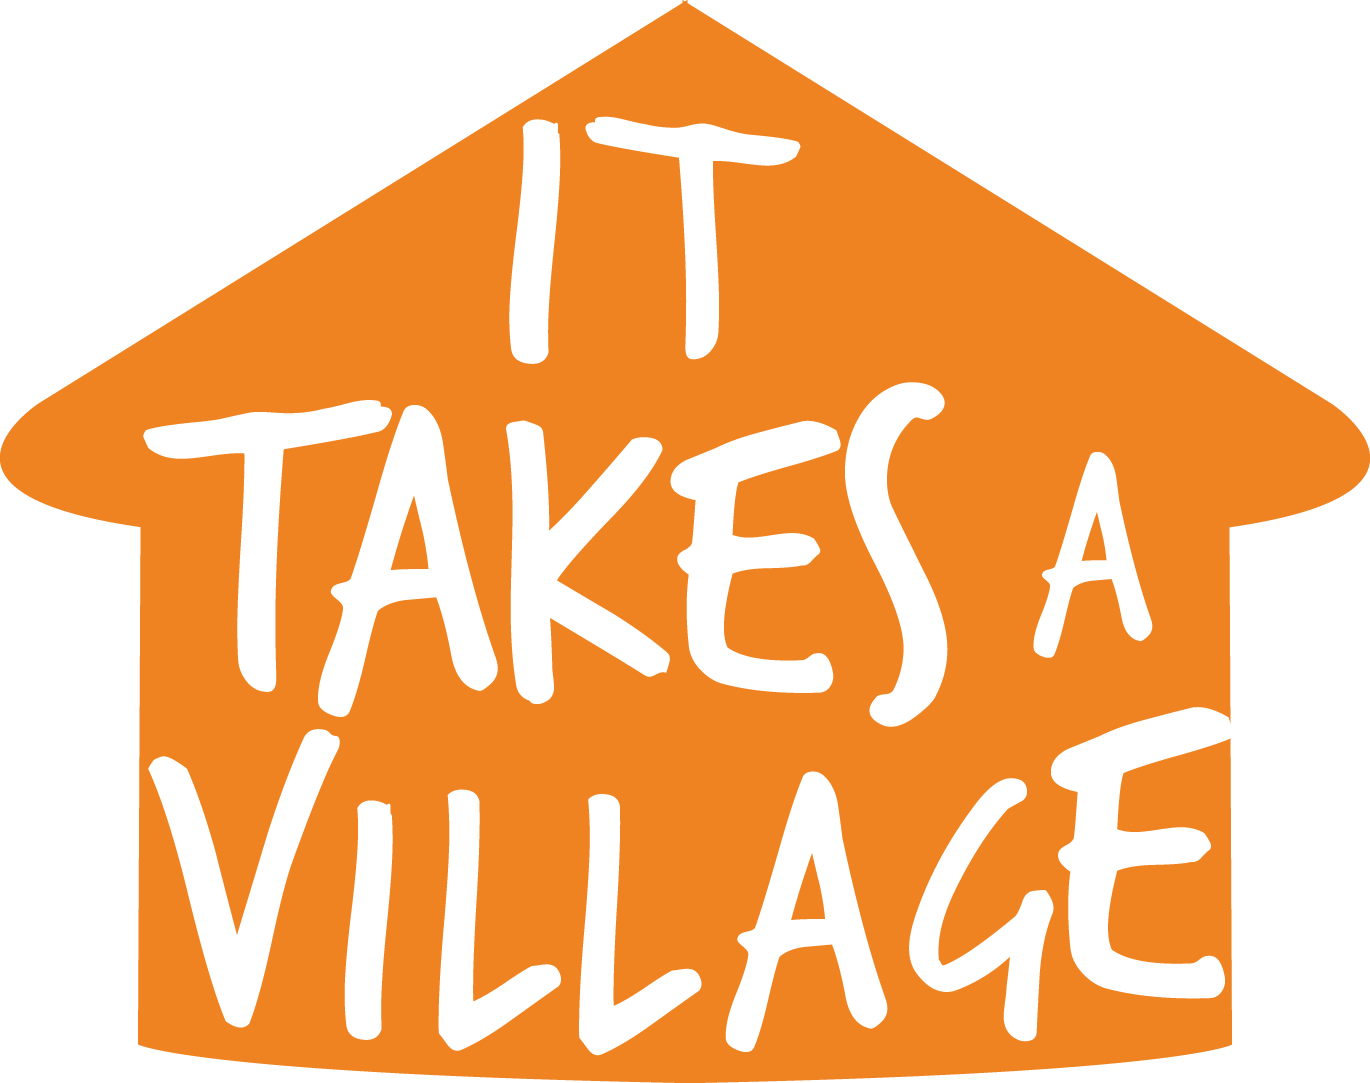 Village Badge Proverb Takes Saying PNG